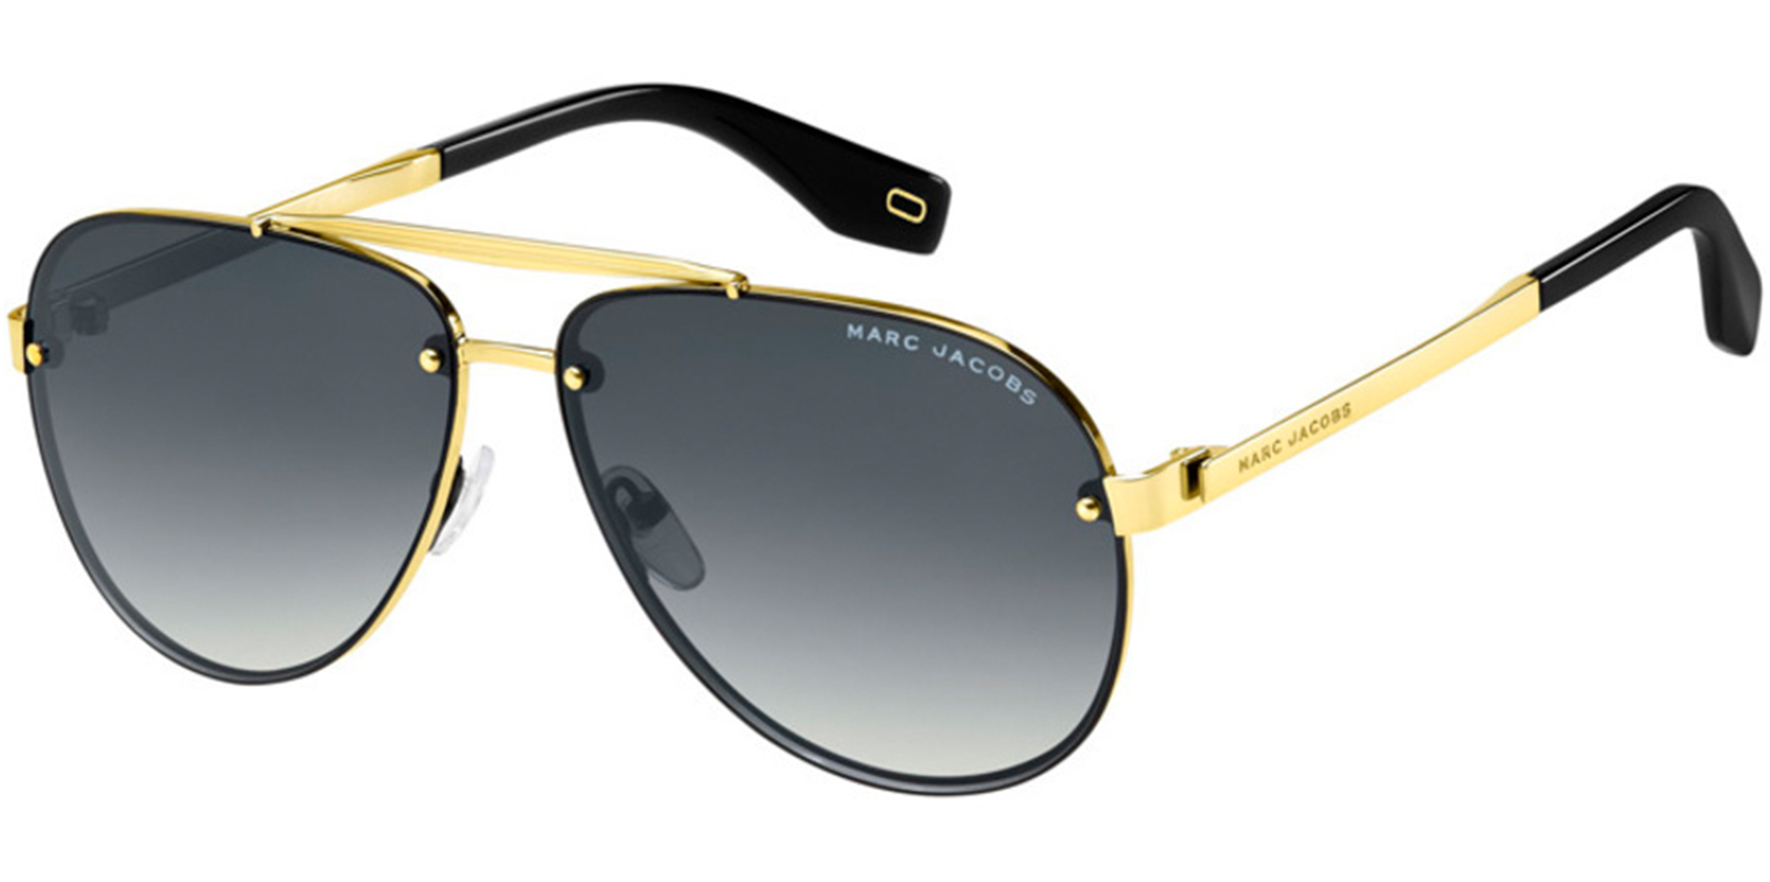 Marc Jacobs Men's & Women's Sunglasses $34 + Free Shipping